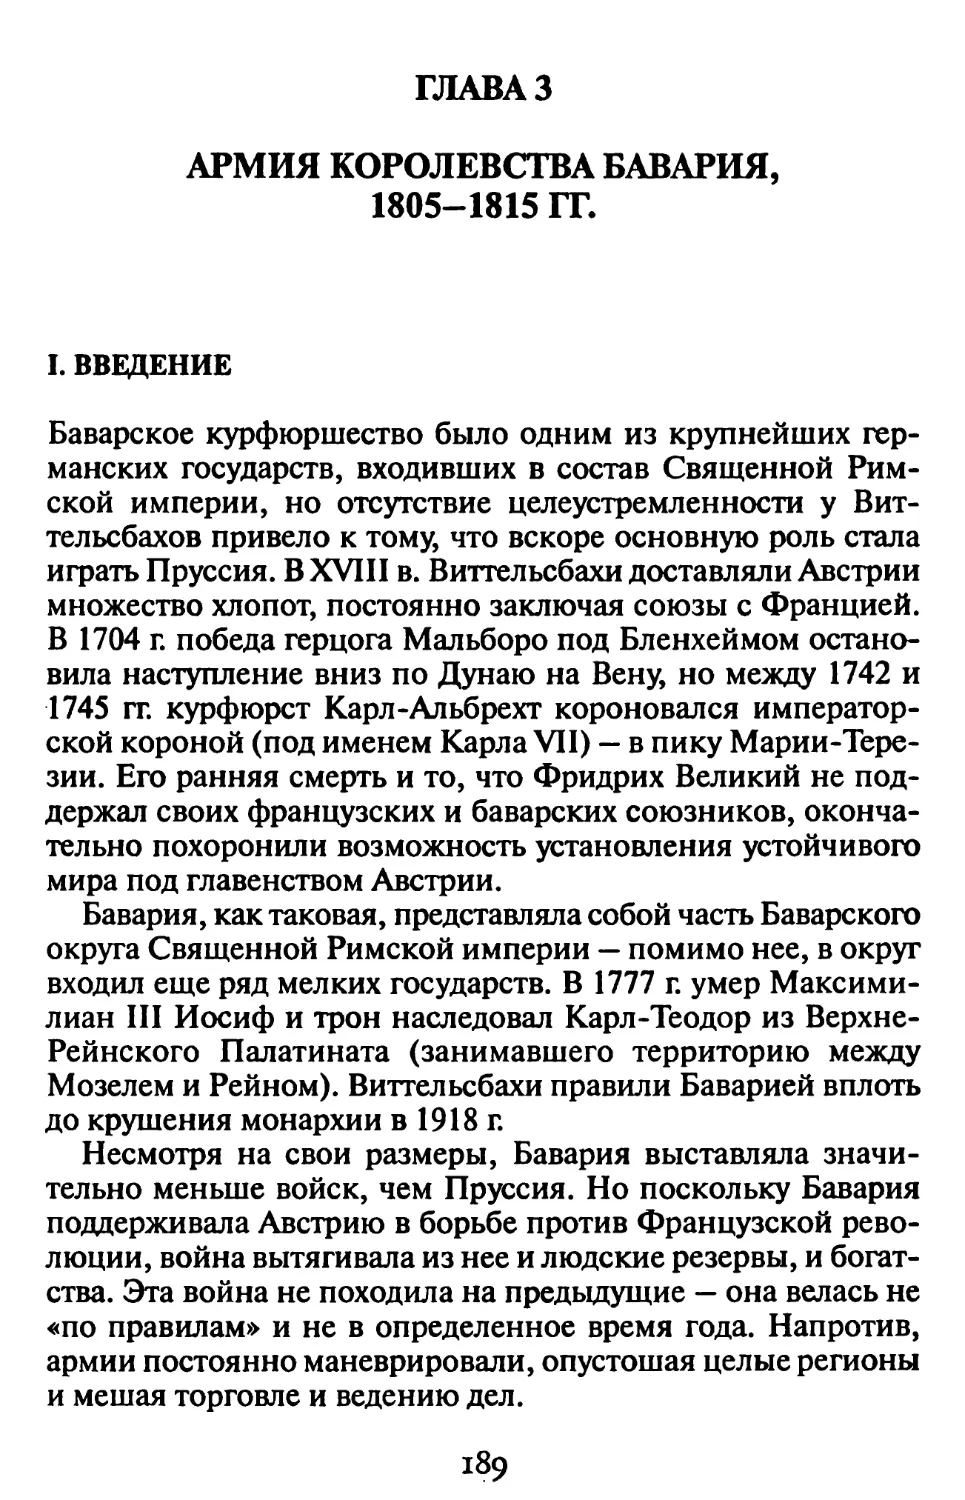 Гл. 3. АРМИЯ КОРОЛЕВСТВА БАВАРИЯ 1805-1815 гг.